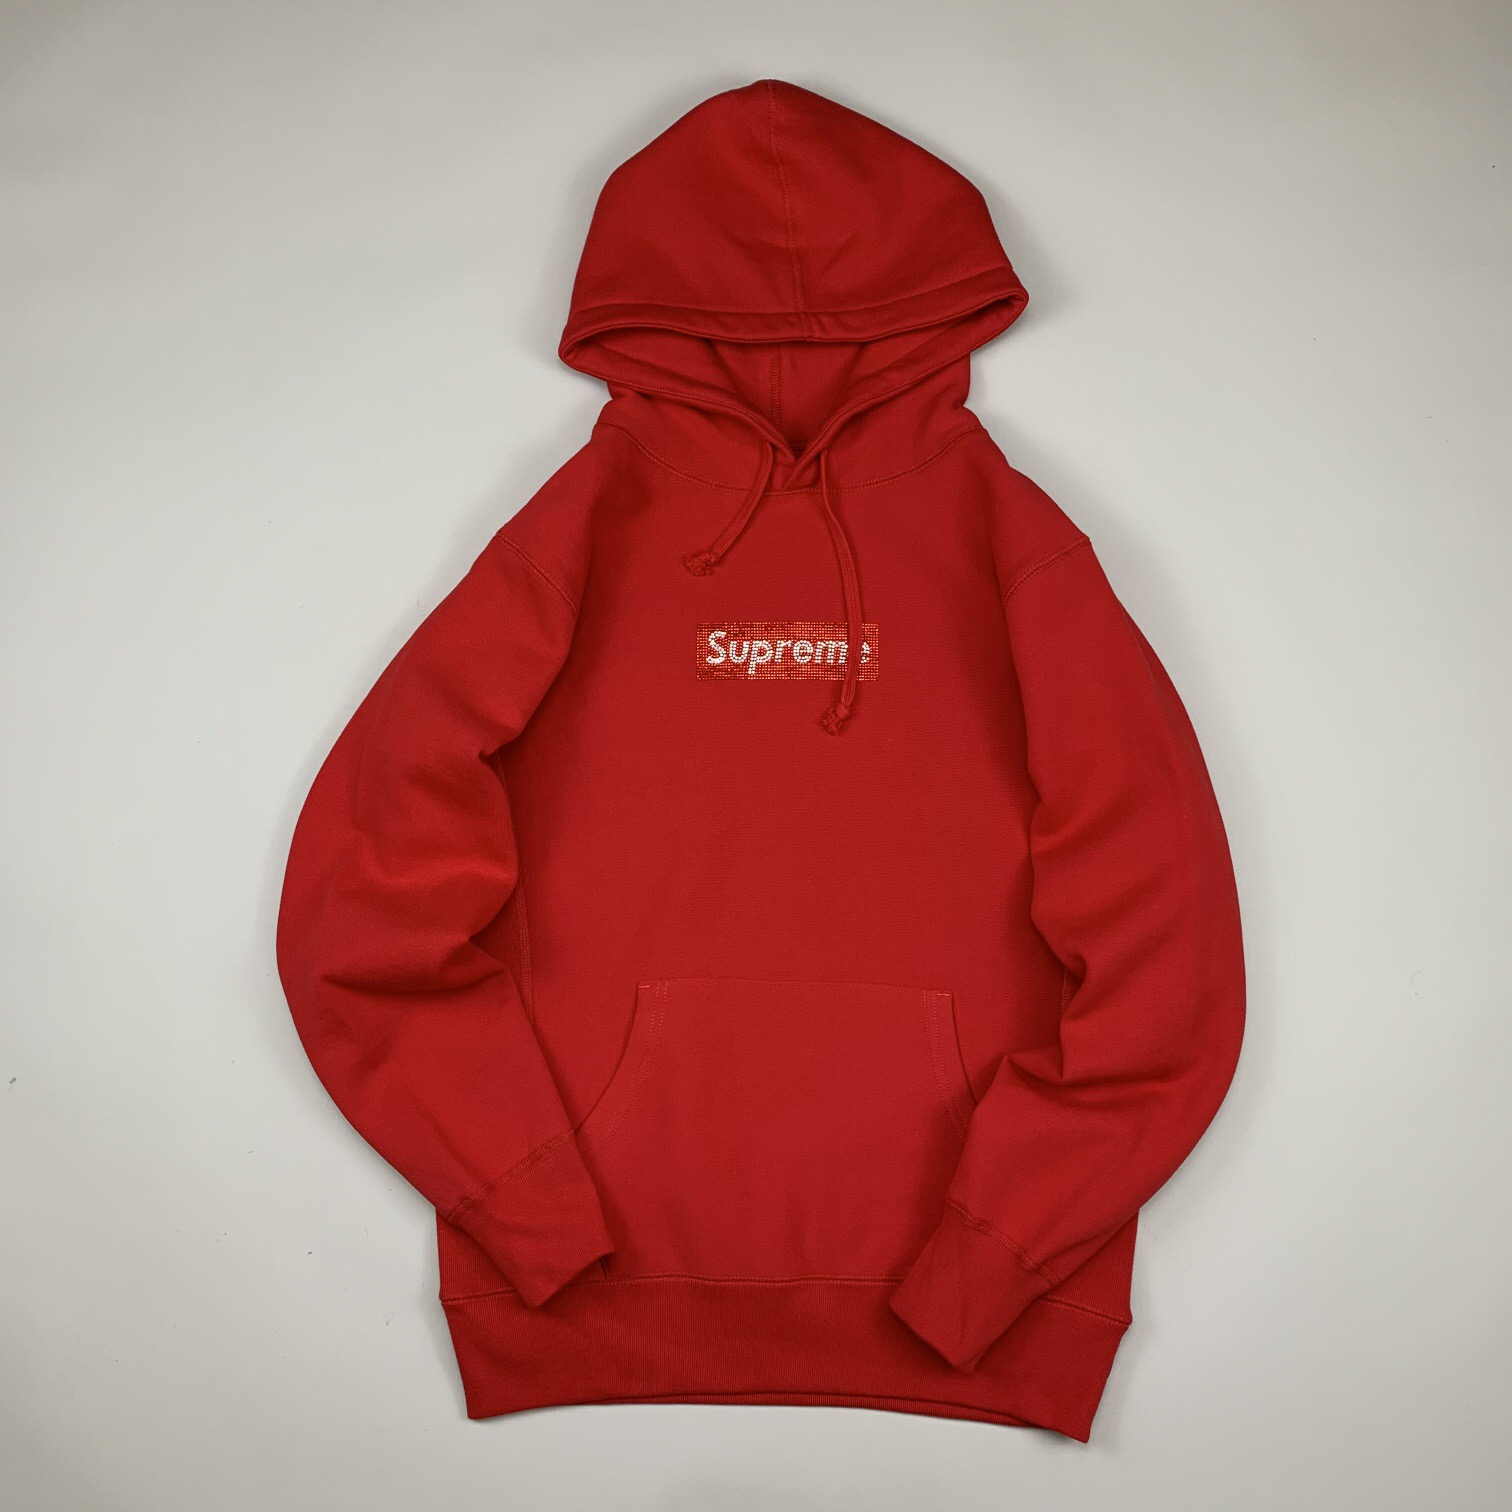 Buy Replica Supreme x Swarovski Box Logo Hooded Sweatshirt Red - Buy ...